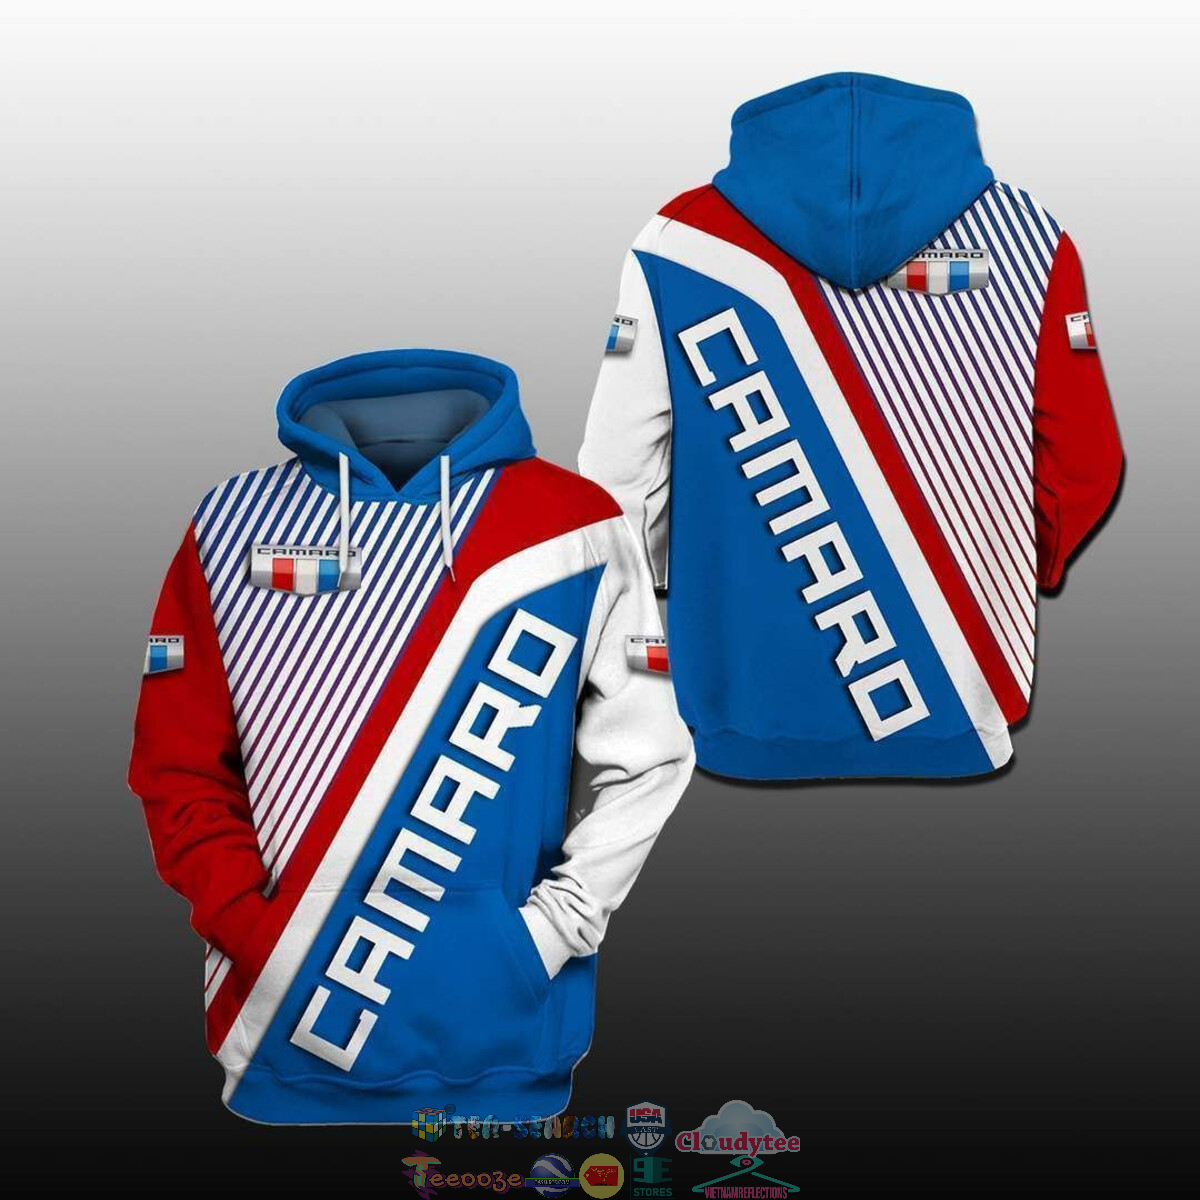 kDUEYpeN-TH130822-42xxxChevrolet-Camaro-ver-1-3D-hoodie-and-t-shirt3.jpg